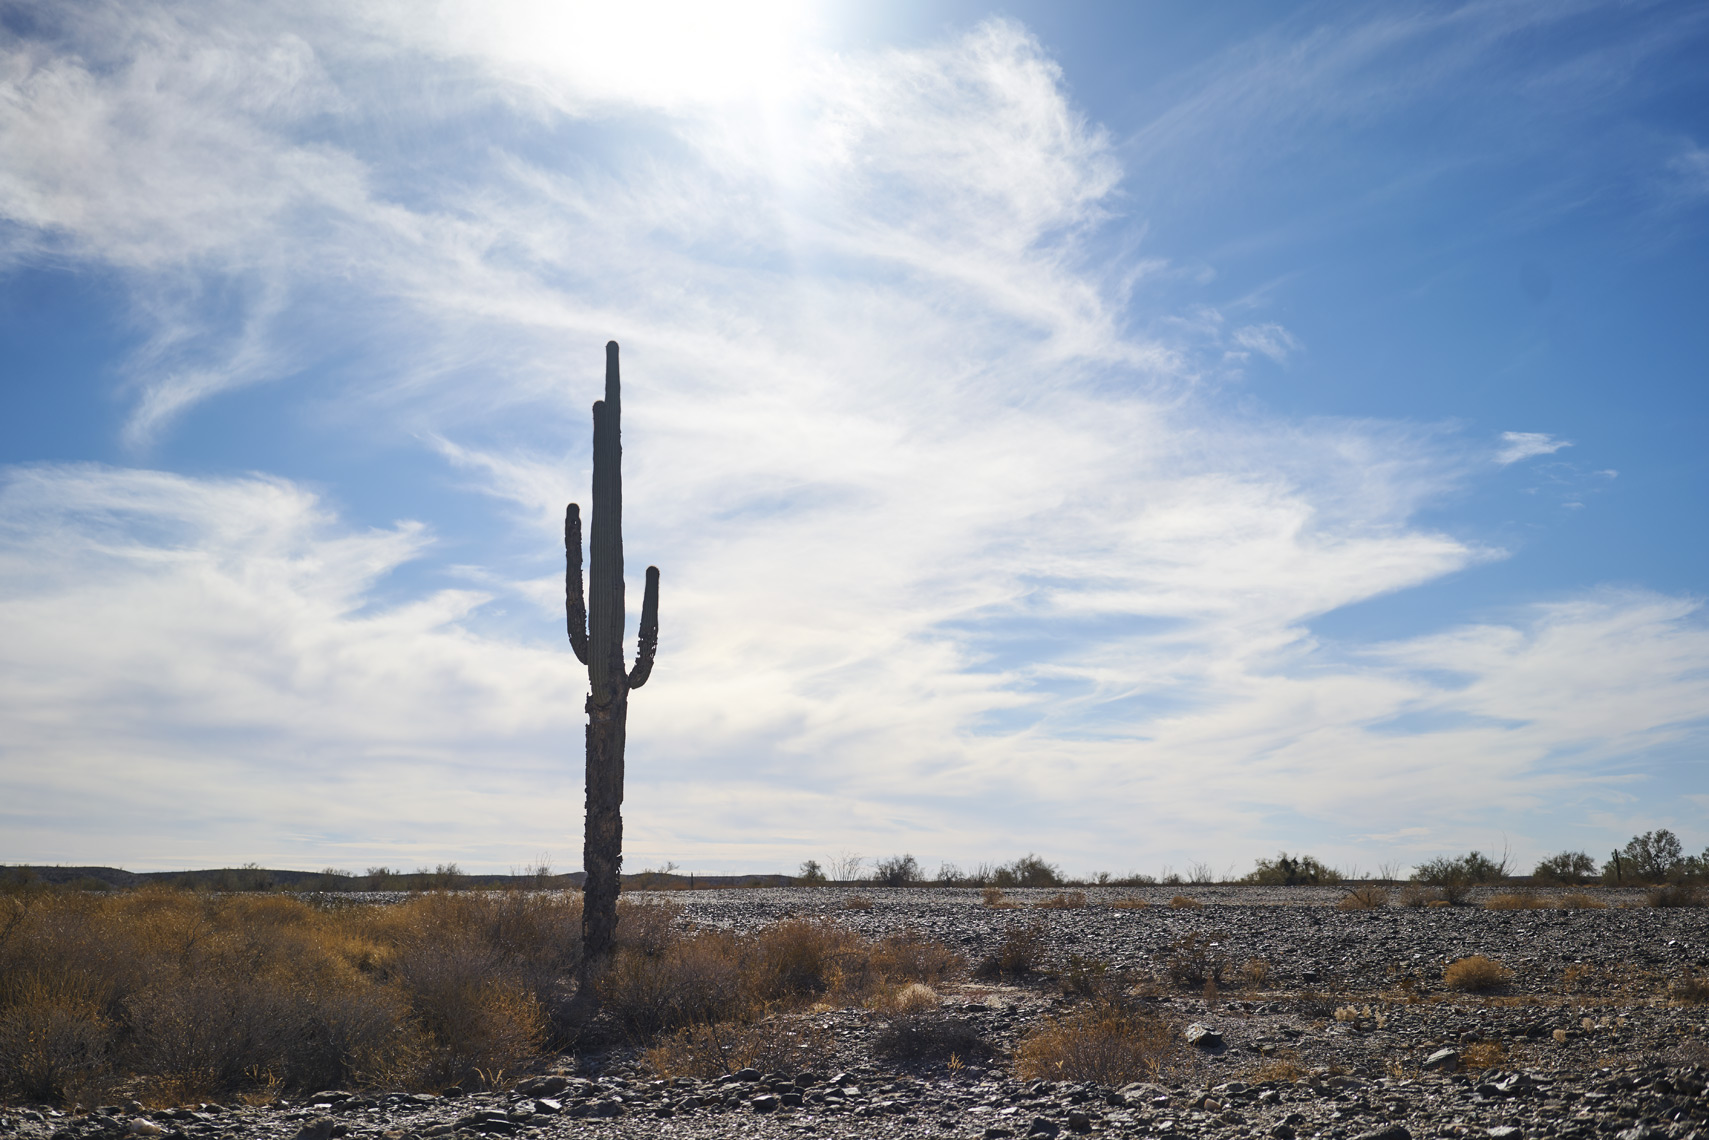 Saguaro cactus against a cloudy sky in Barry M. Goldwater Range desert Yuma Arizona Sean Dagen Photography